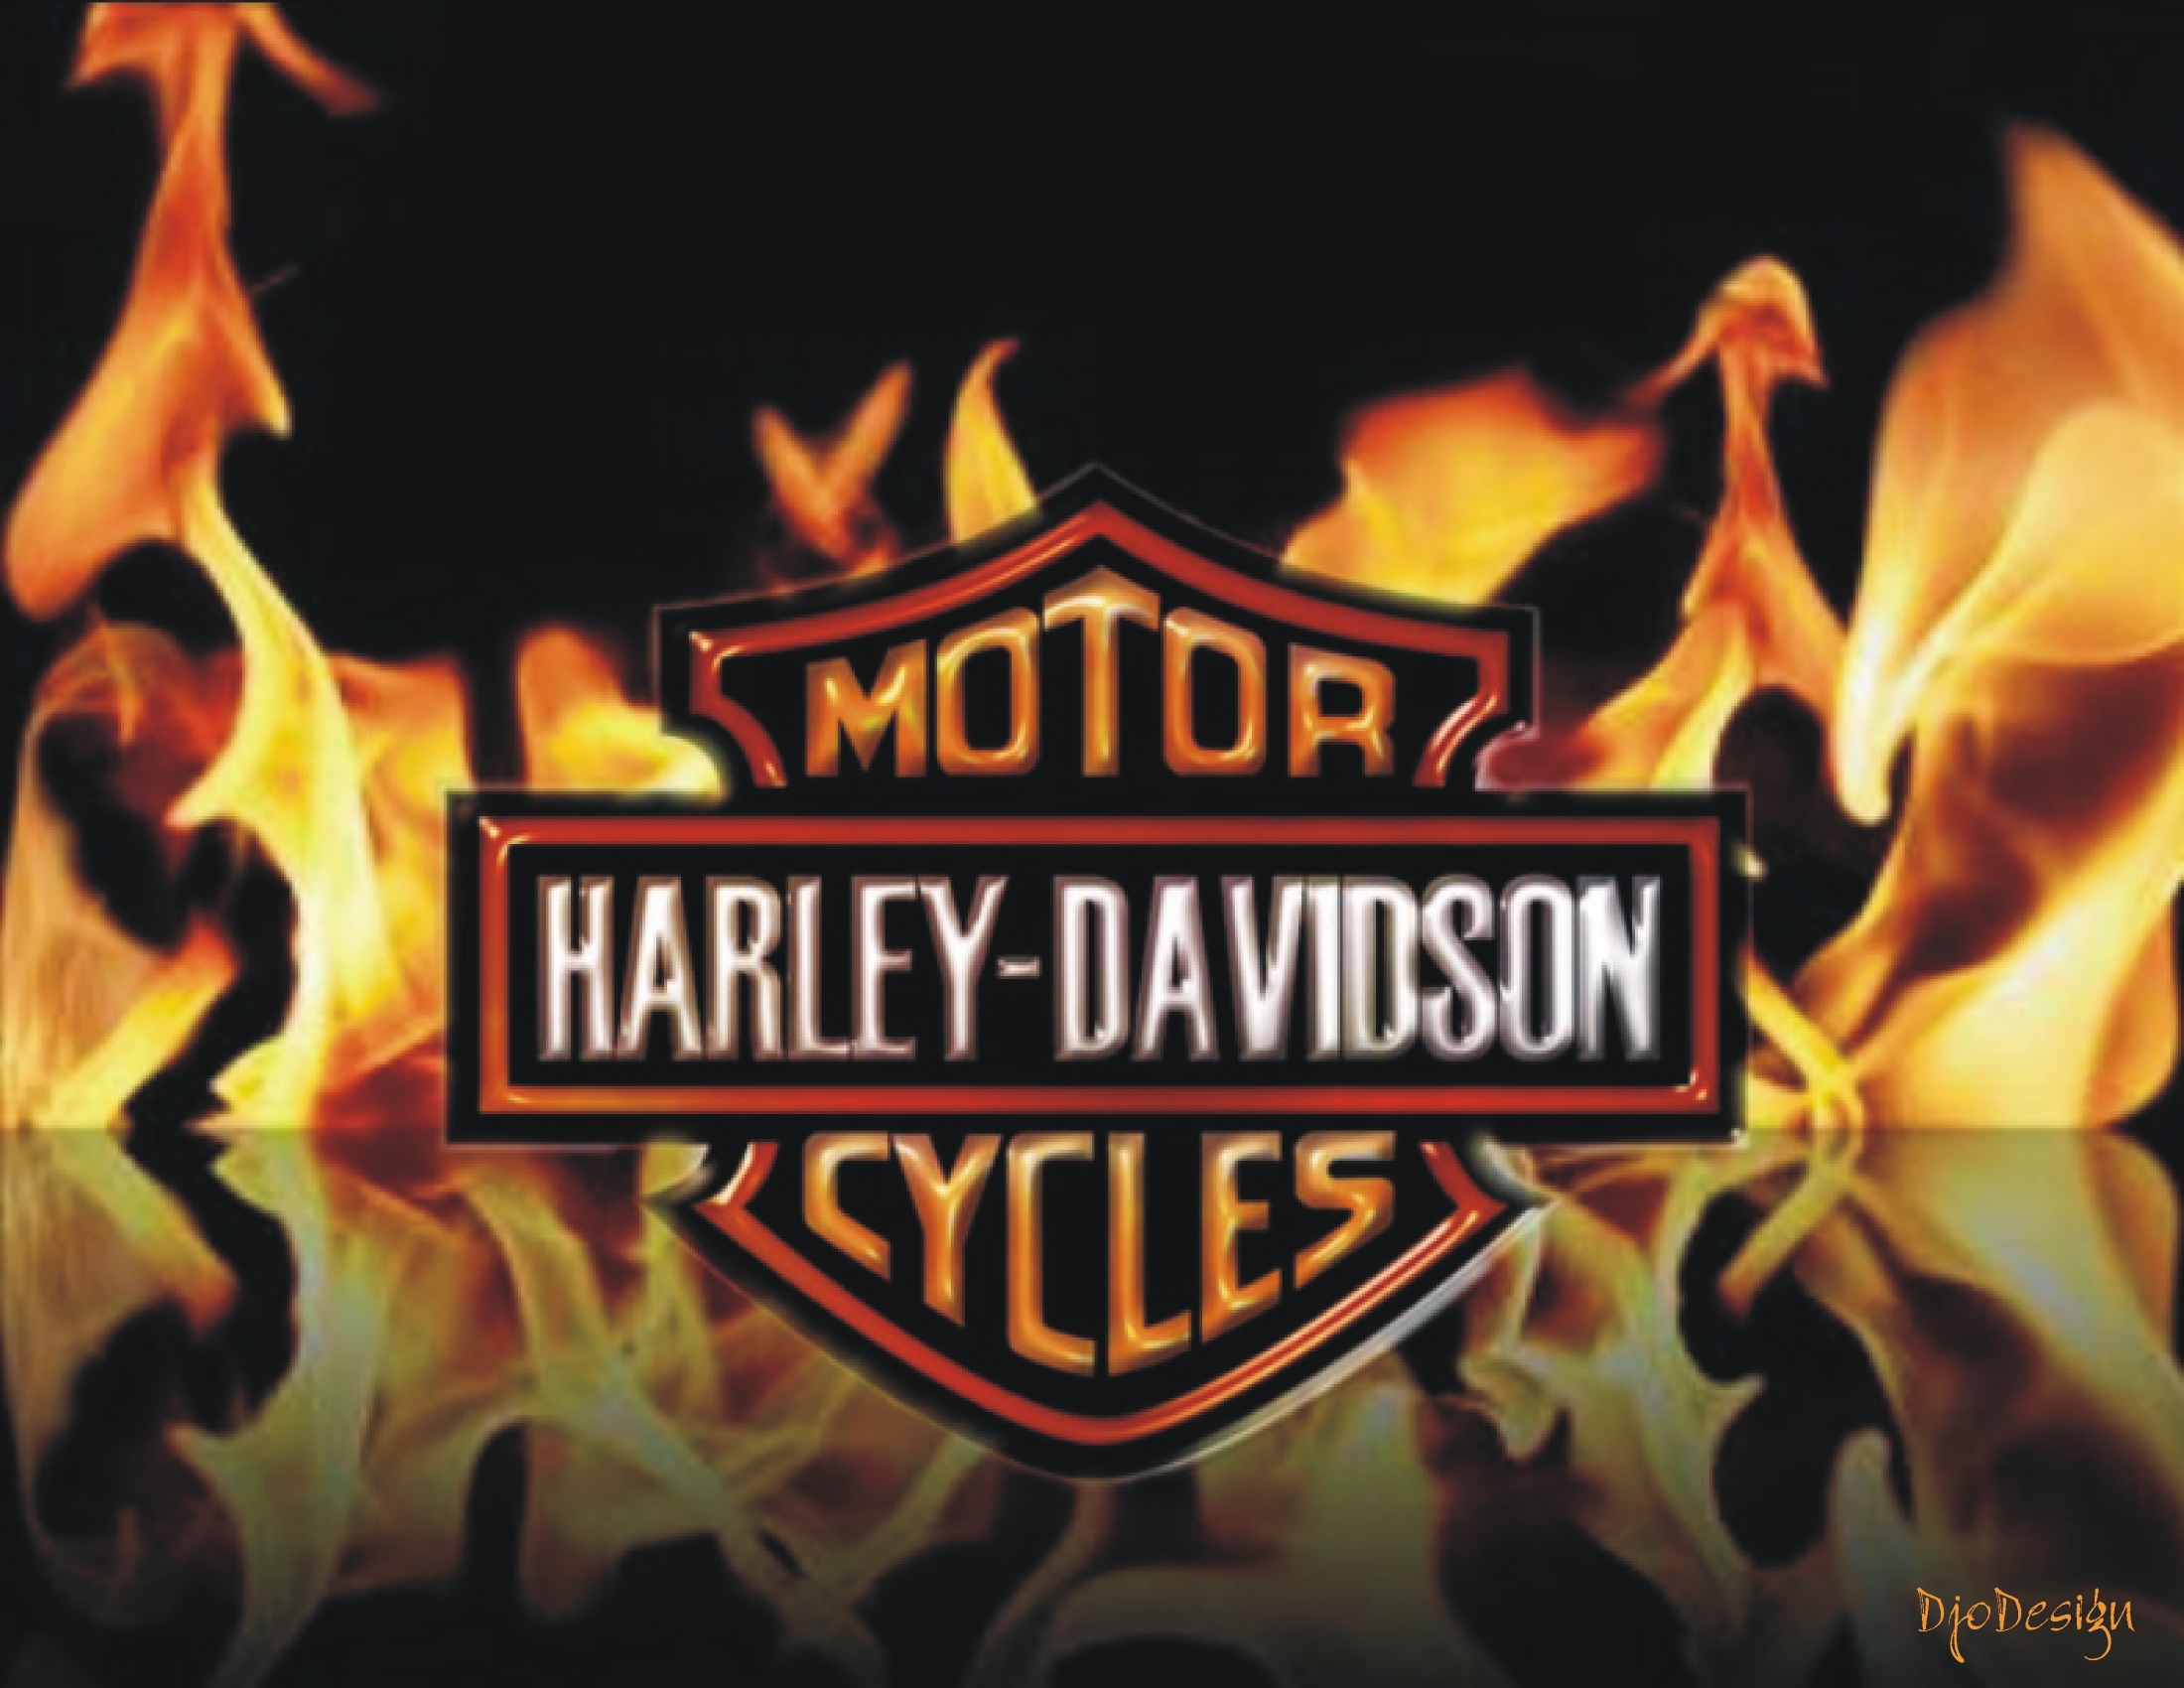 harley davidson, vehicles, flame, logo